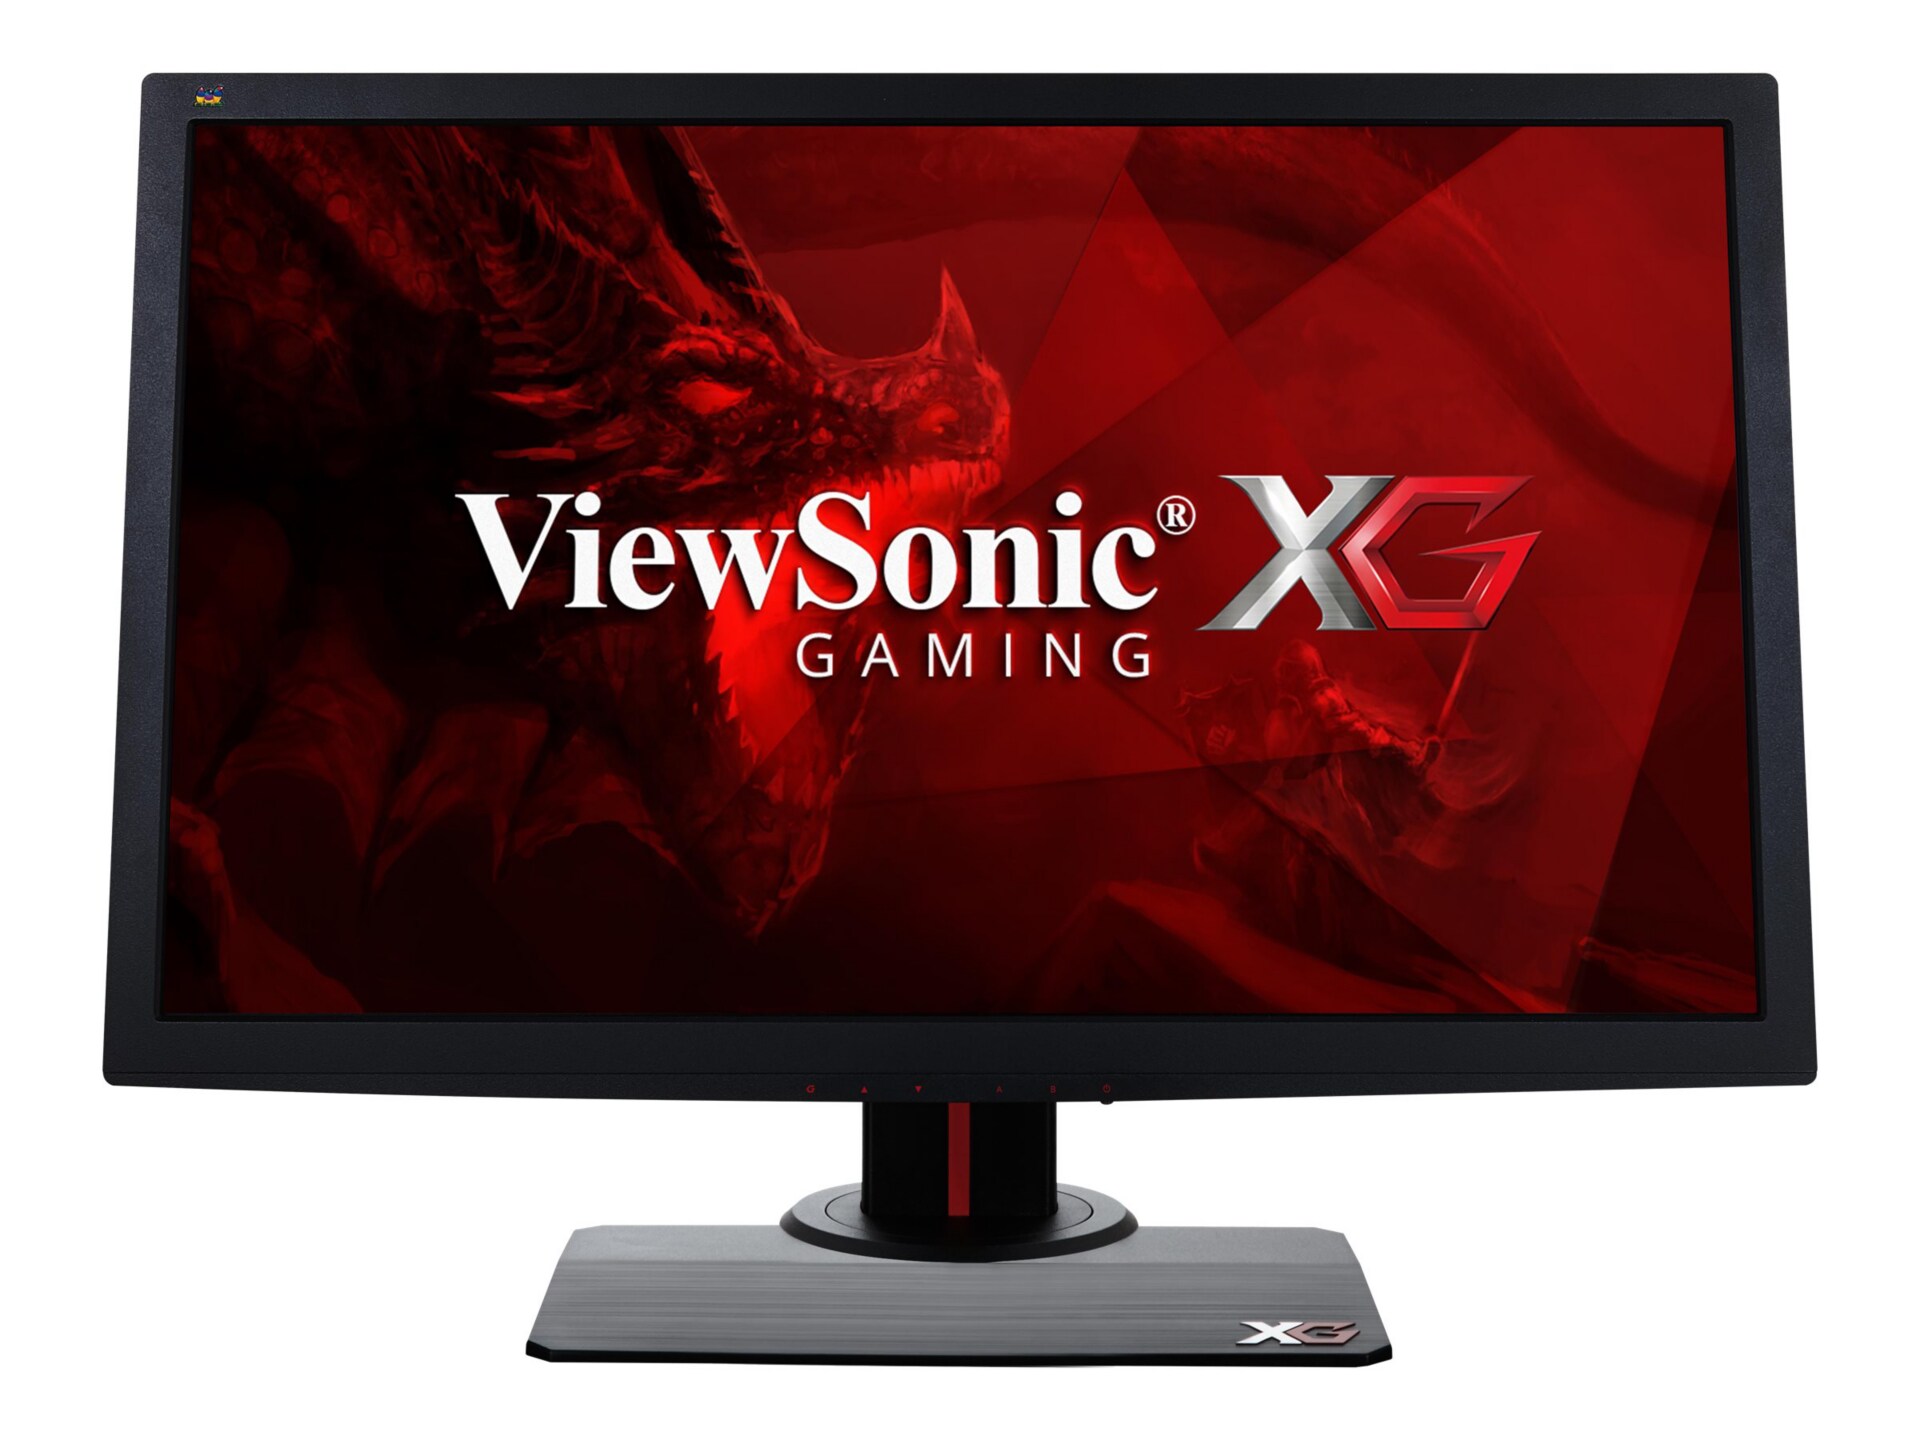 ViewSonic XG Gaming XG2702 - LED monitor - Full HD (1080p) - 27"